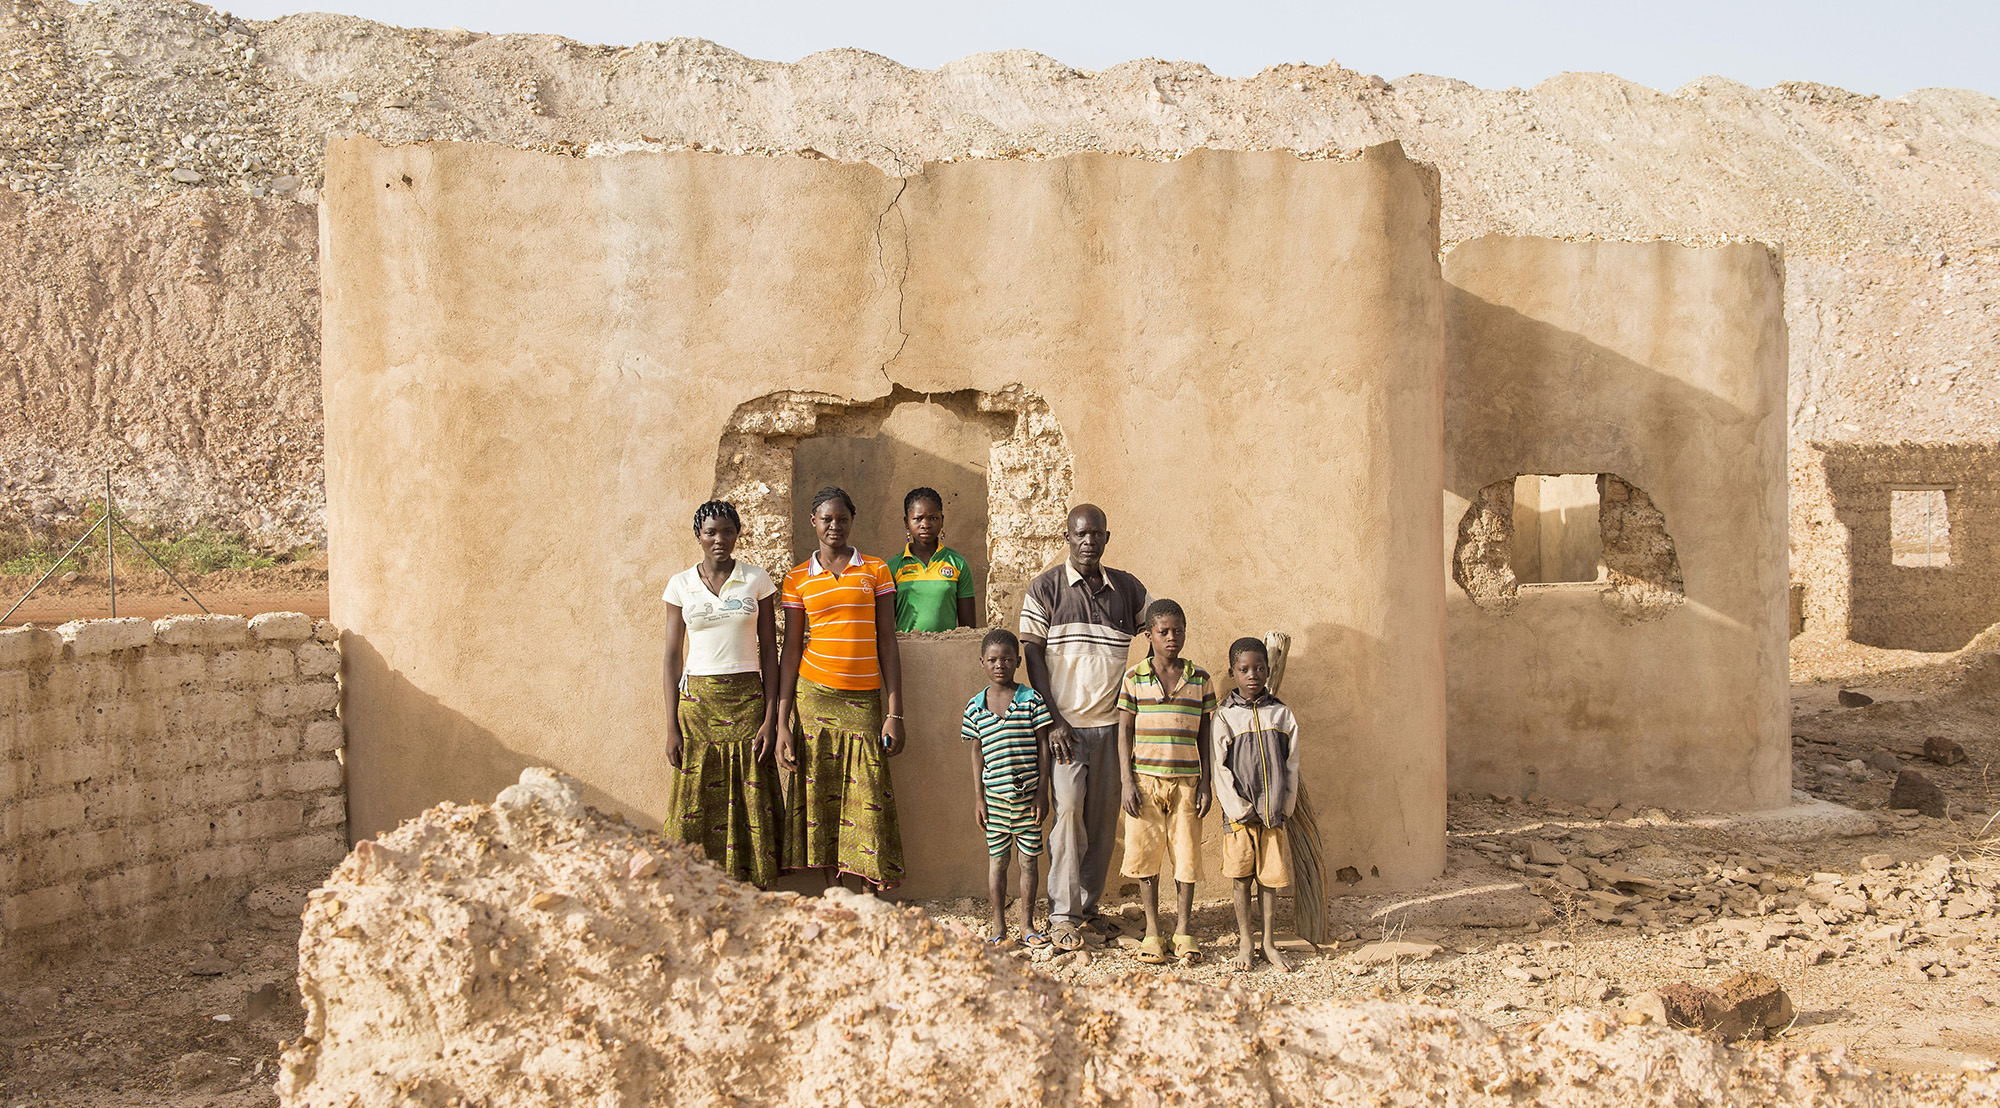 Gold mining in Burkina Faso: Profit before human rights?